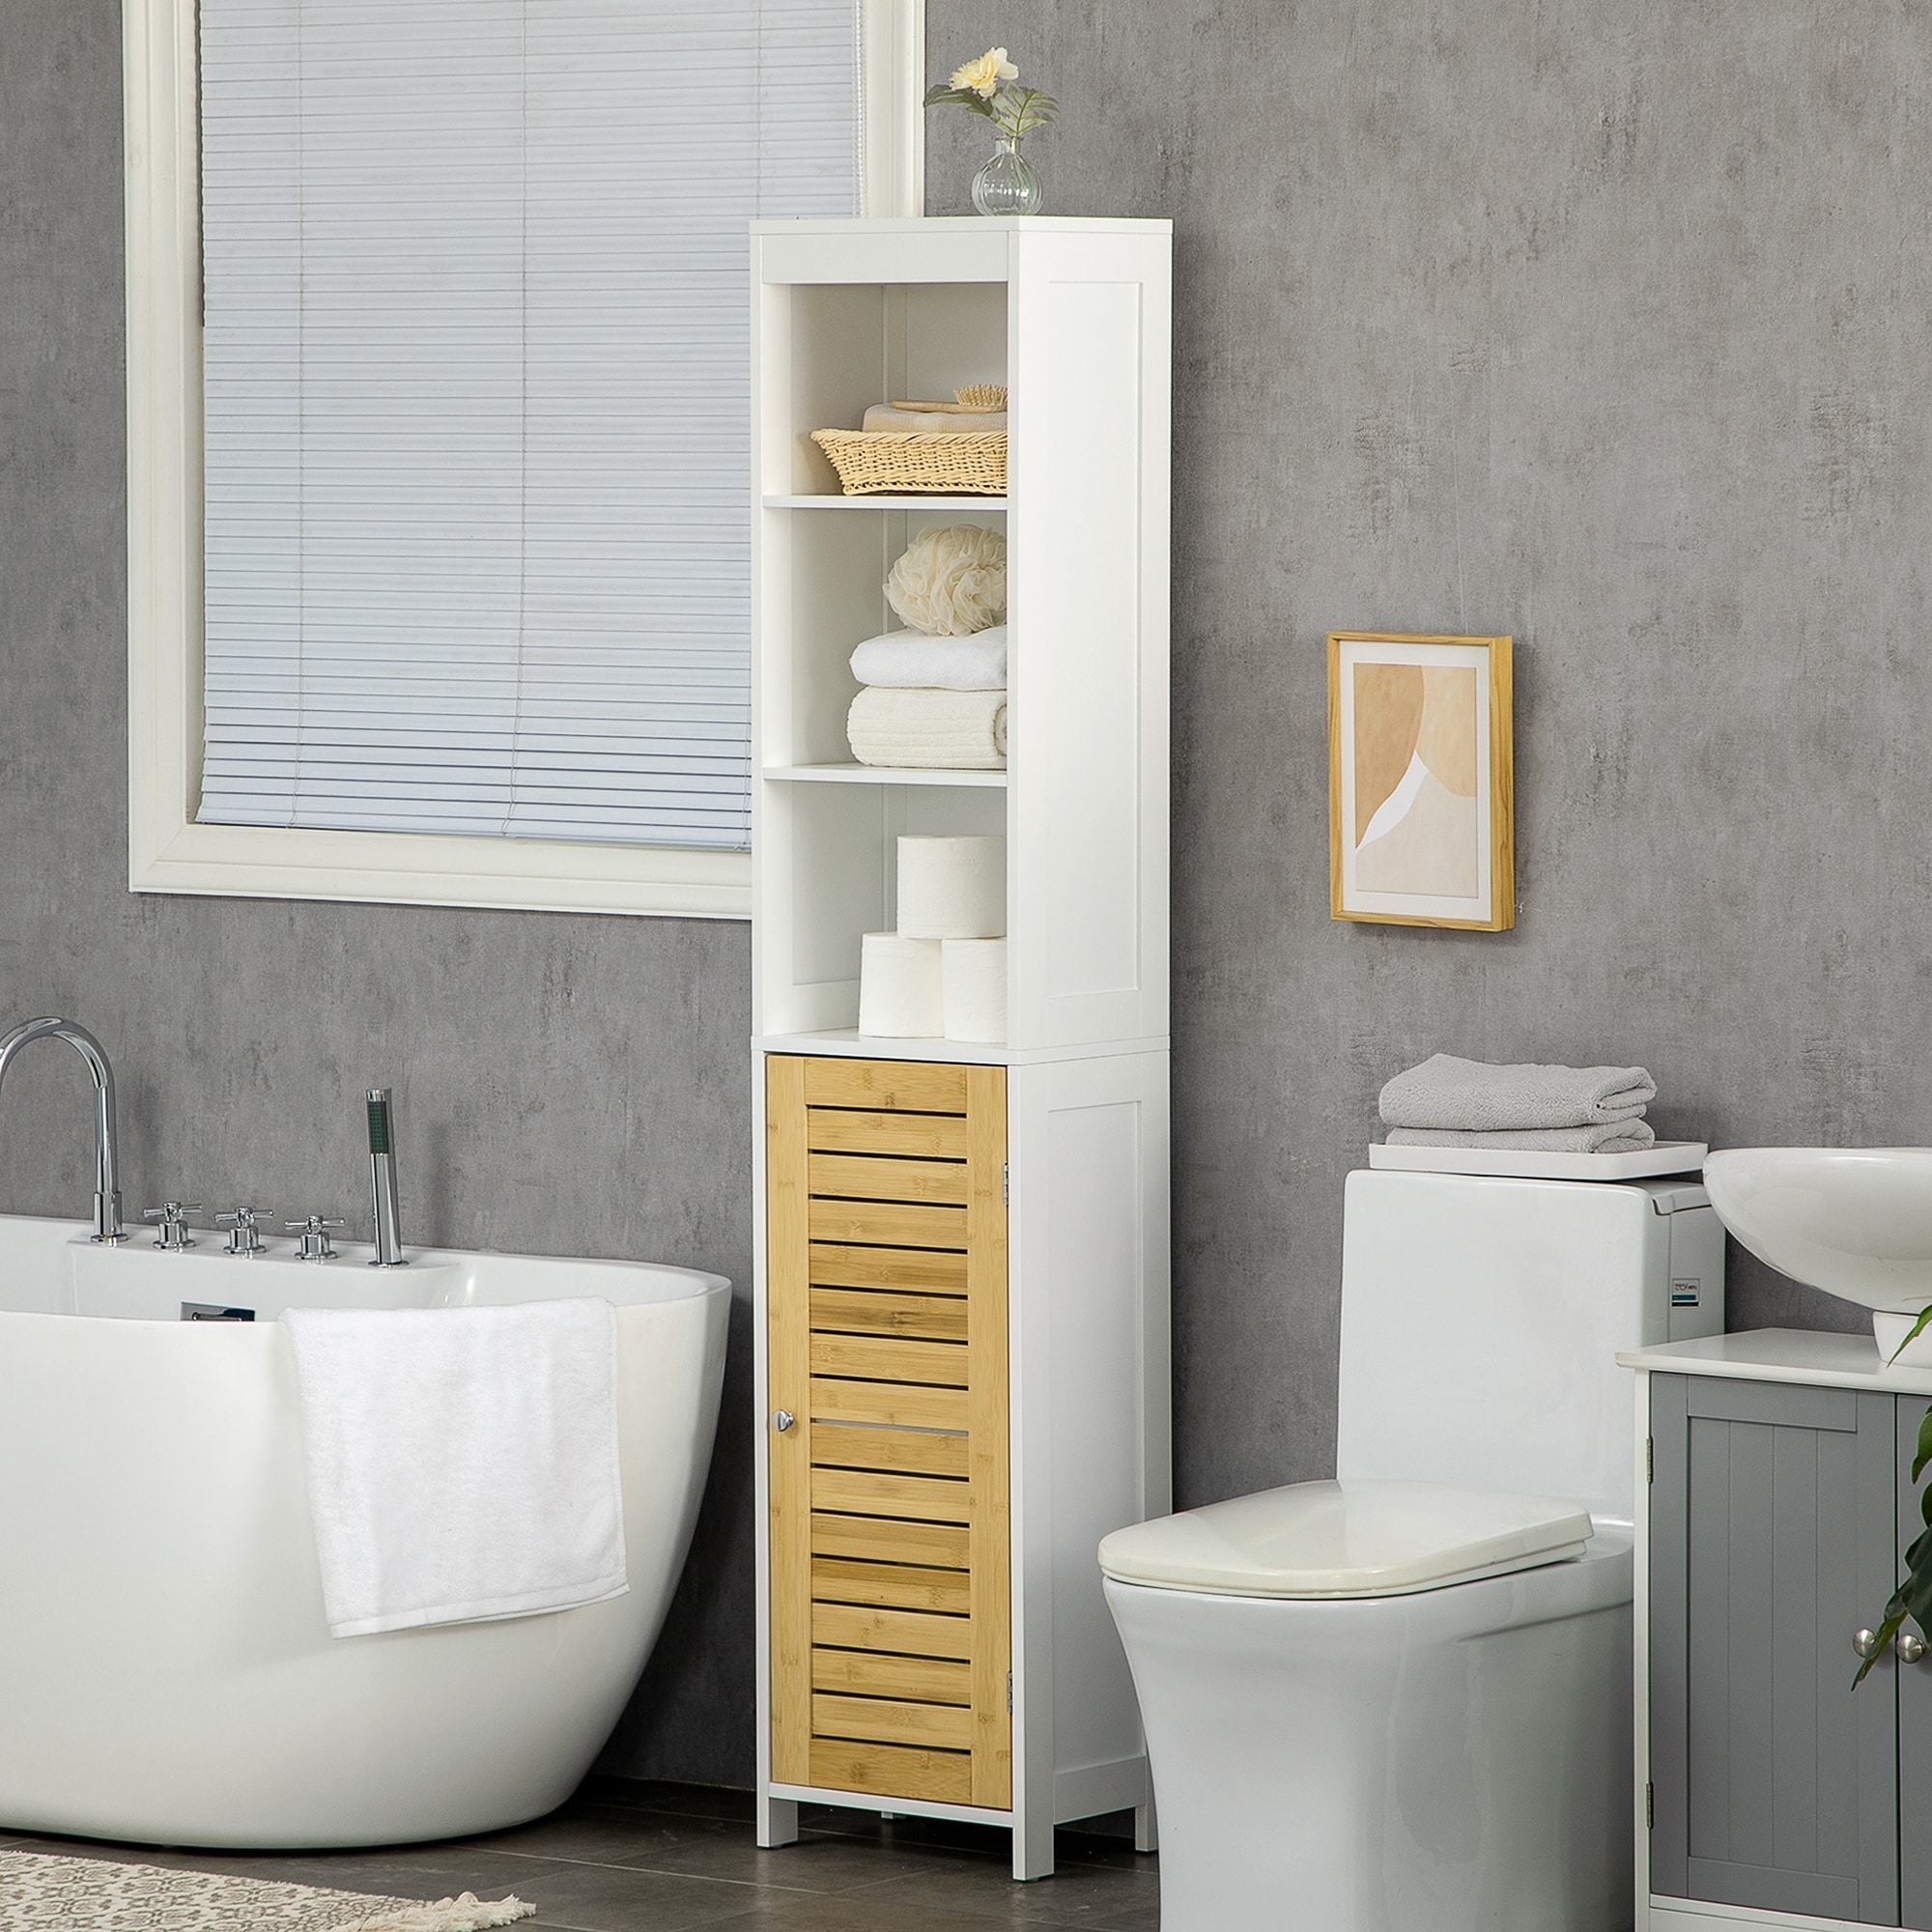 https://ak1.ostkcdn.com/images/products/is/images/direct/676ecb624a8dc0bd10185f9f64327f90e99d0ae0/kleankin-Tall-Bathroom-Storage-Cabinet%2C-Free-Standing-Bathroom-Cabinet-Slim-Side-Organizer-w--3-Tier-Shelf%2C-Bamboo-Door%2C-White.jpg